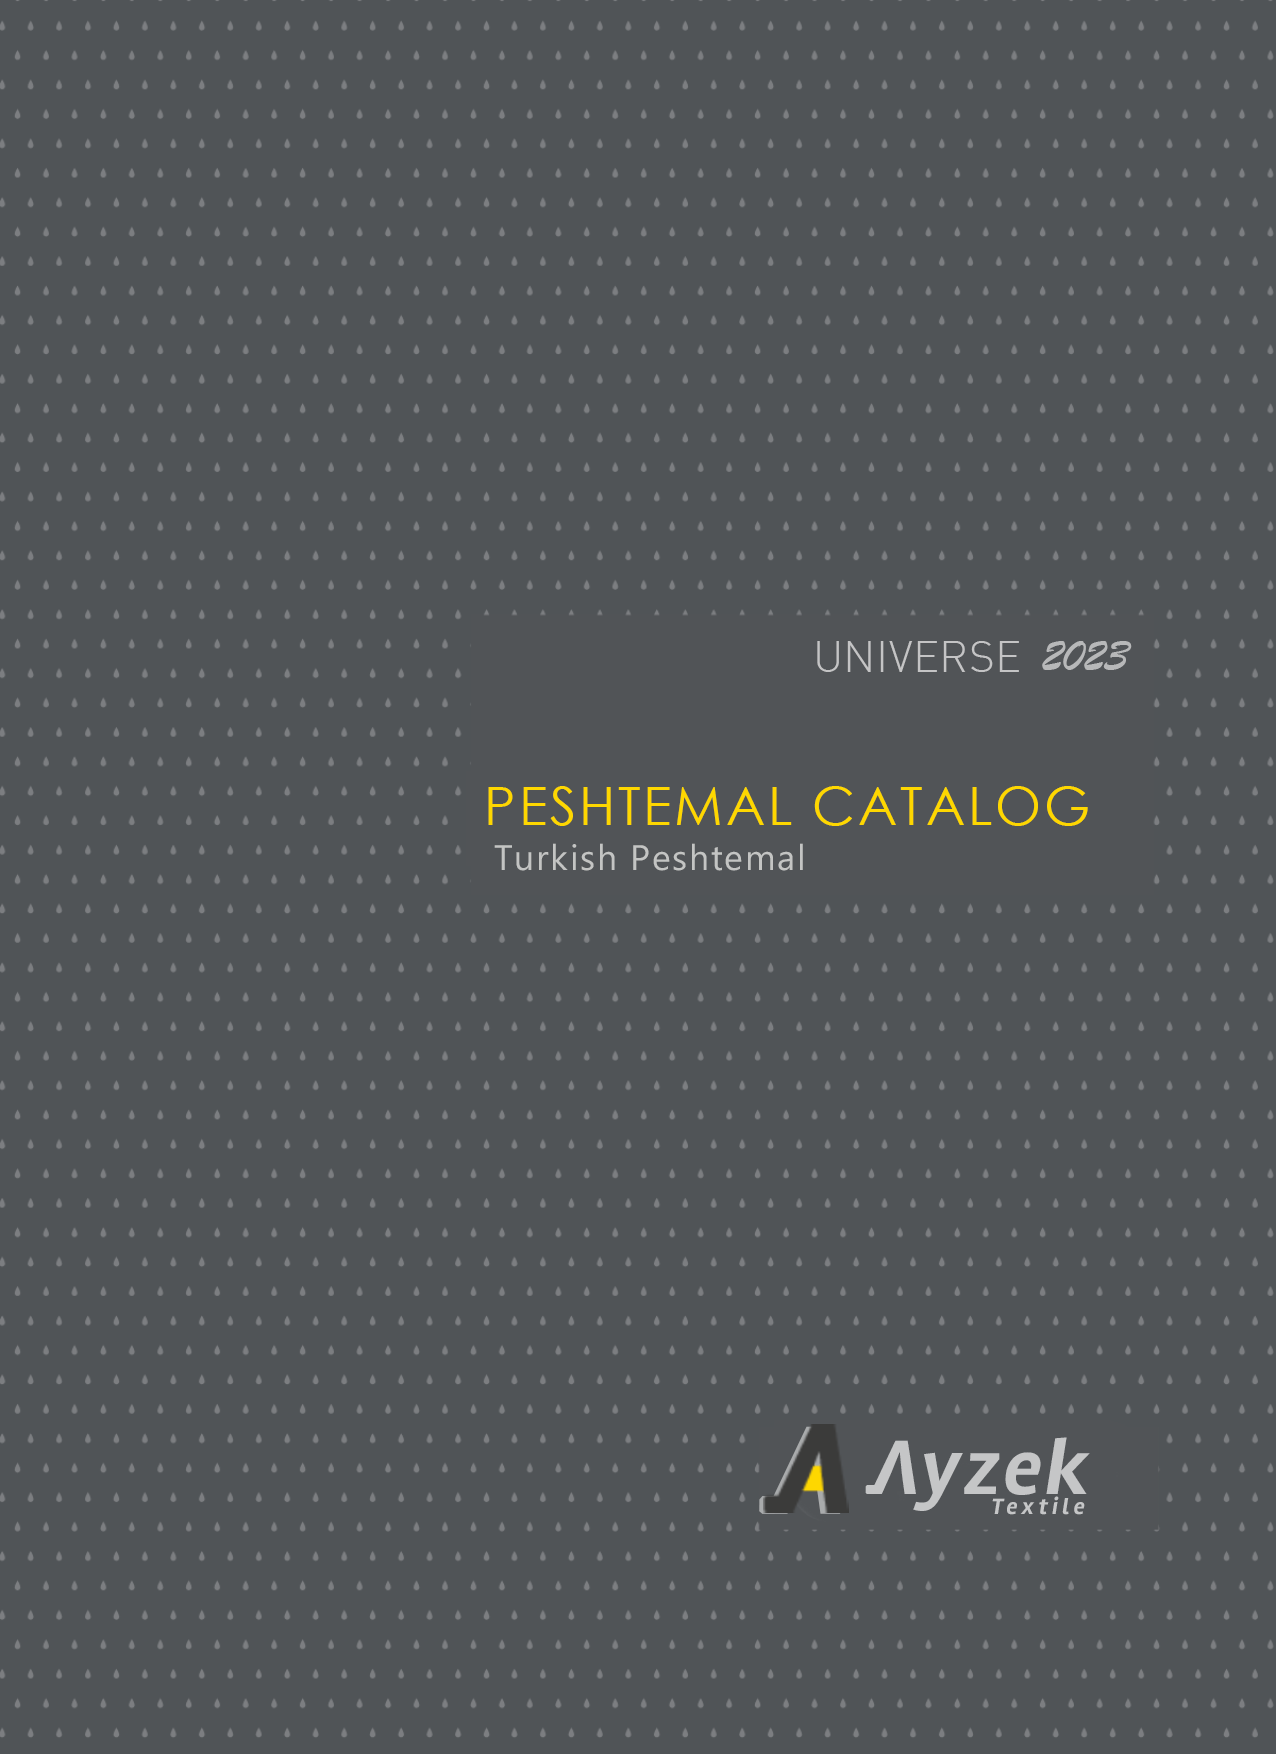 Ayzek-Textile-Peshtemal-Catalog